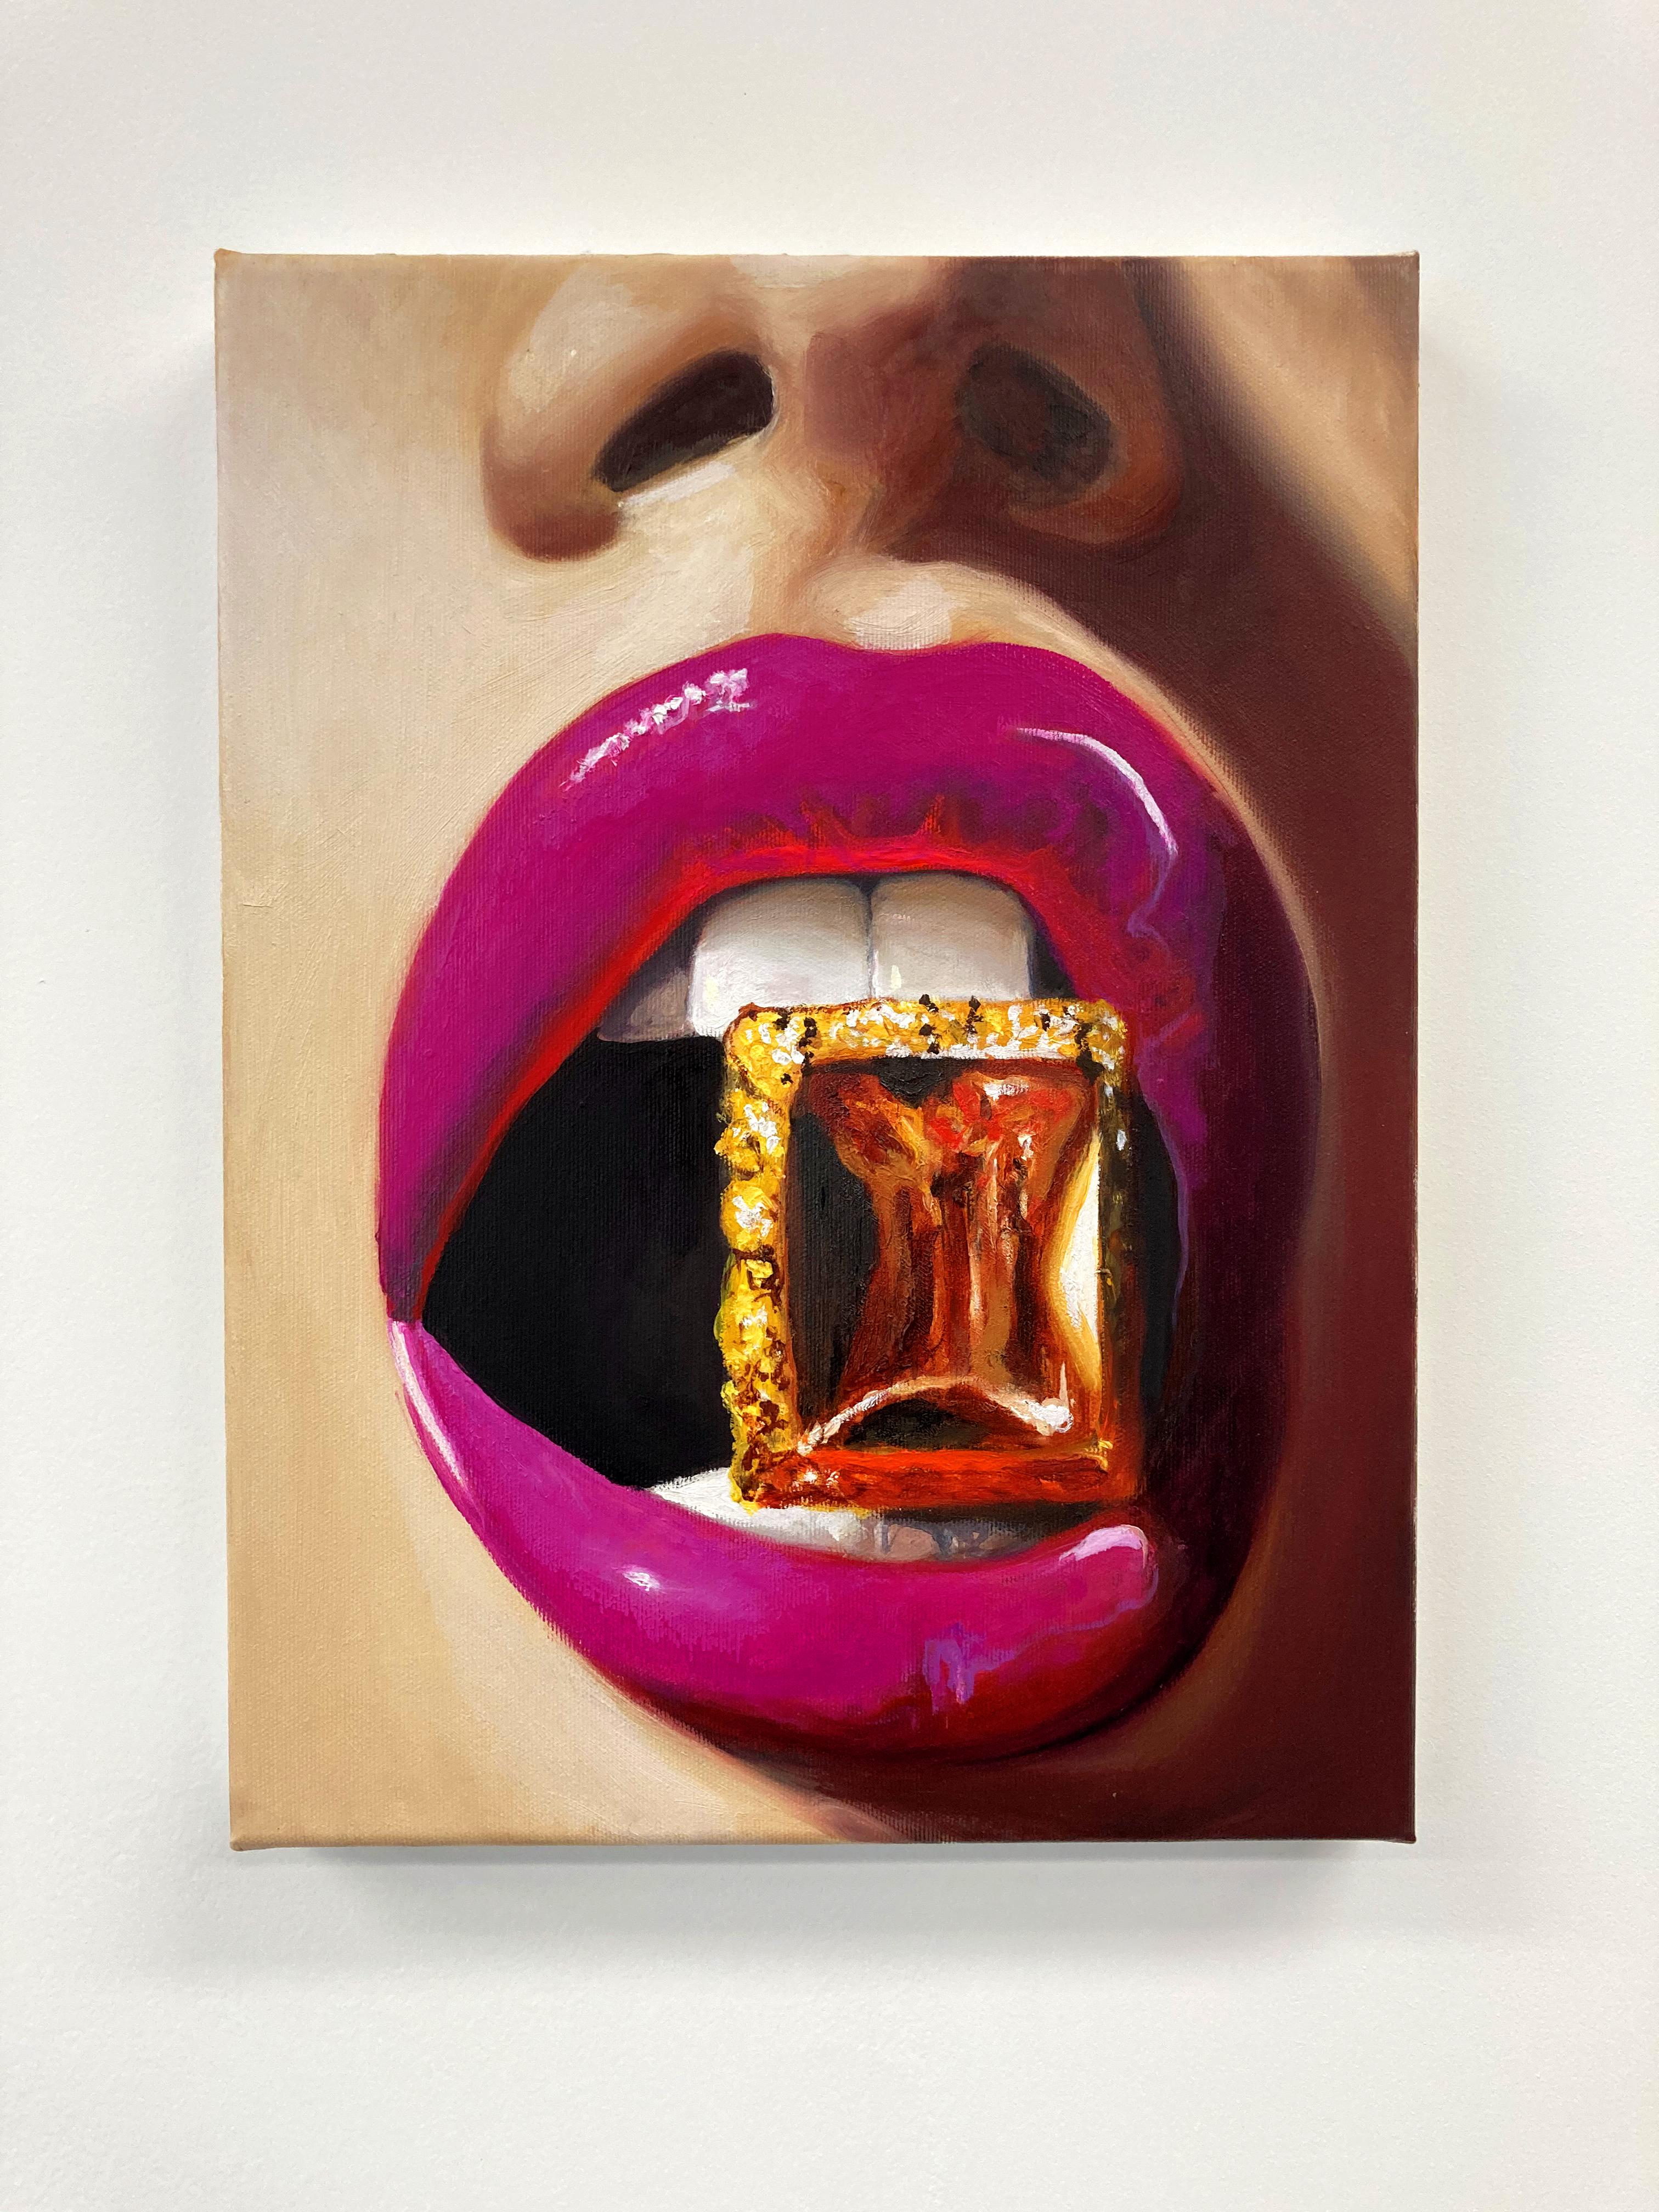 Ring - Contemporary, Pop Art, Lips, Figurative, modern, jewel, female Portrait - Painting by Manzur Kargar